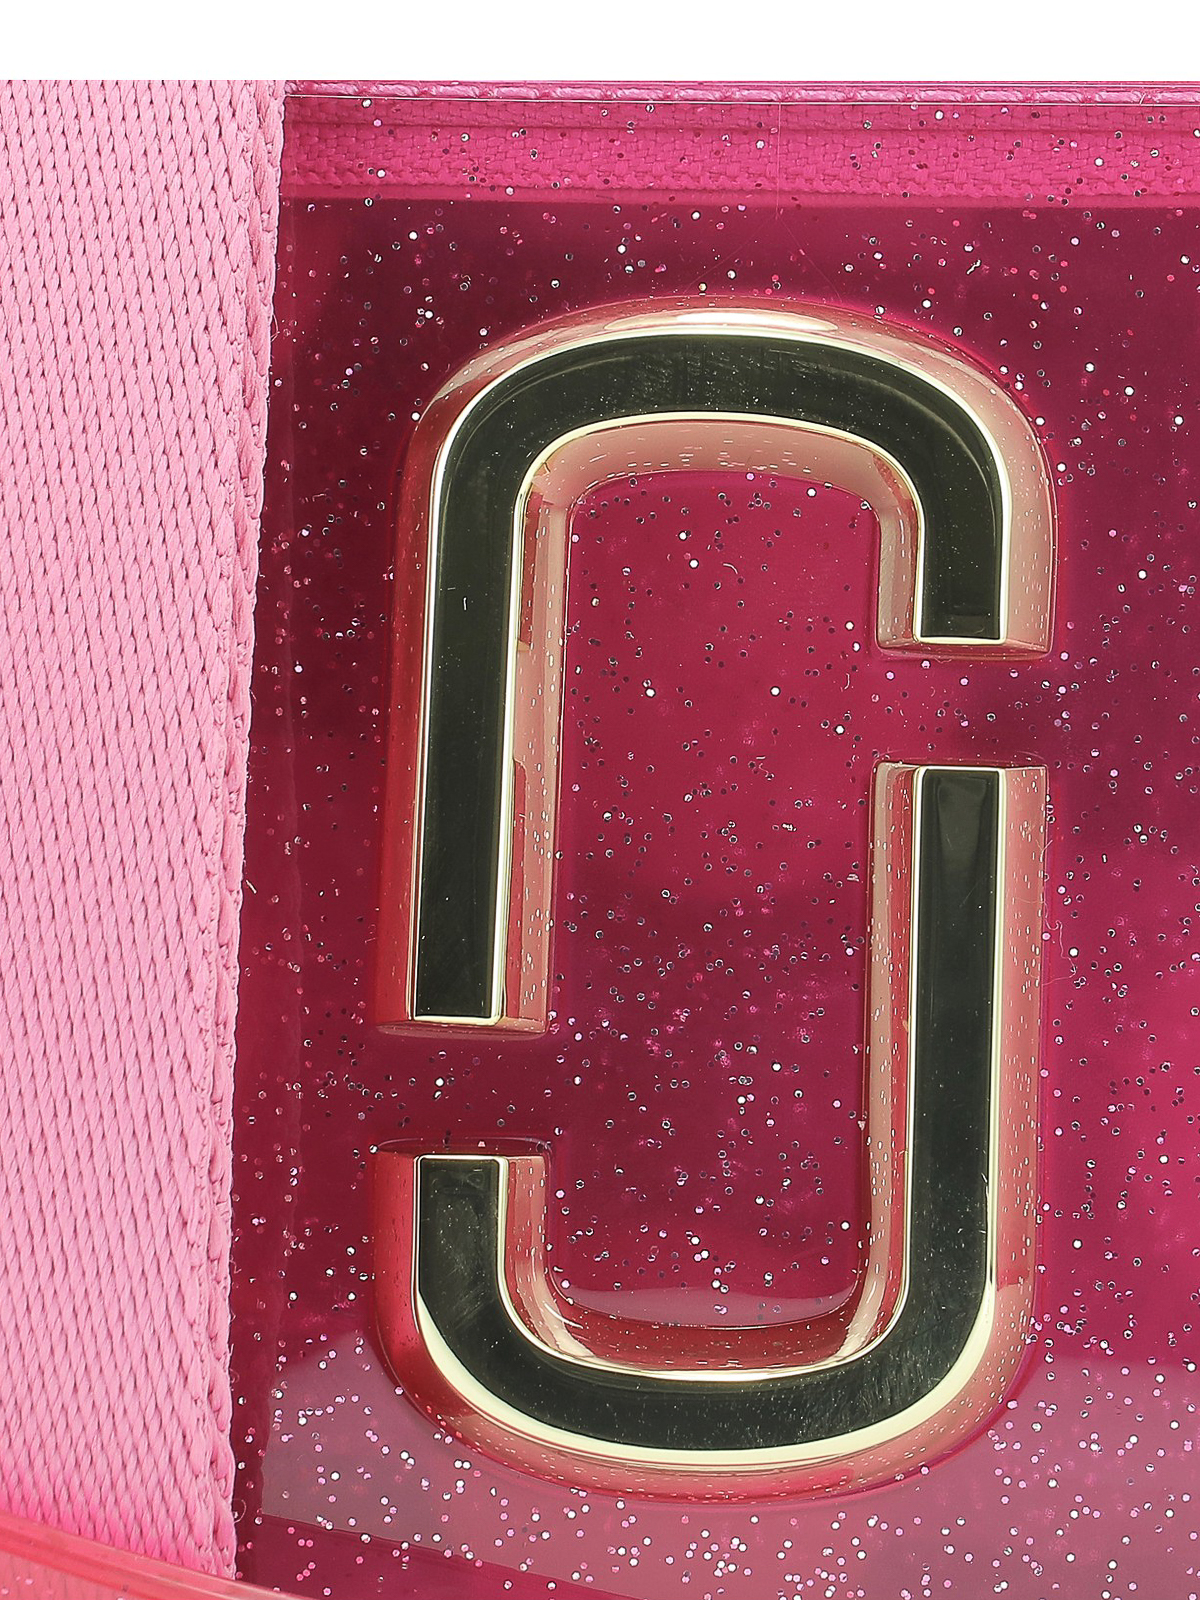 Marc Jacobs Pink Glitter Snapshot Bag - ShopStyle